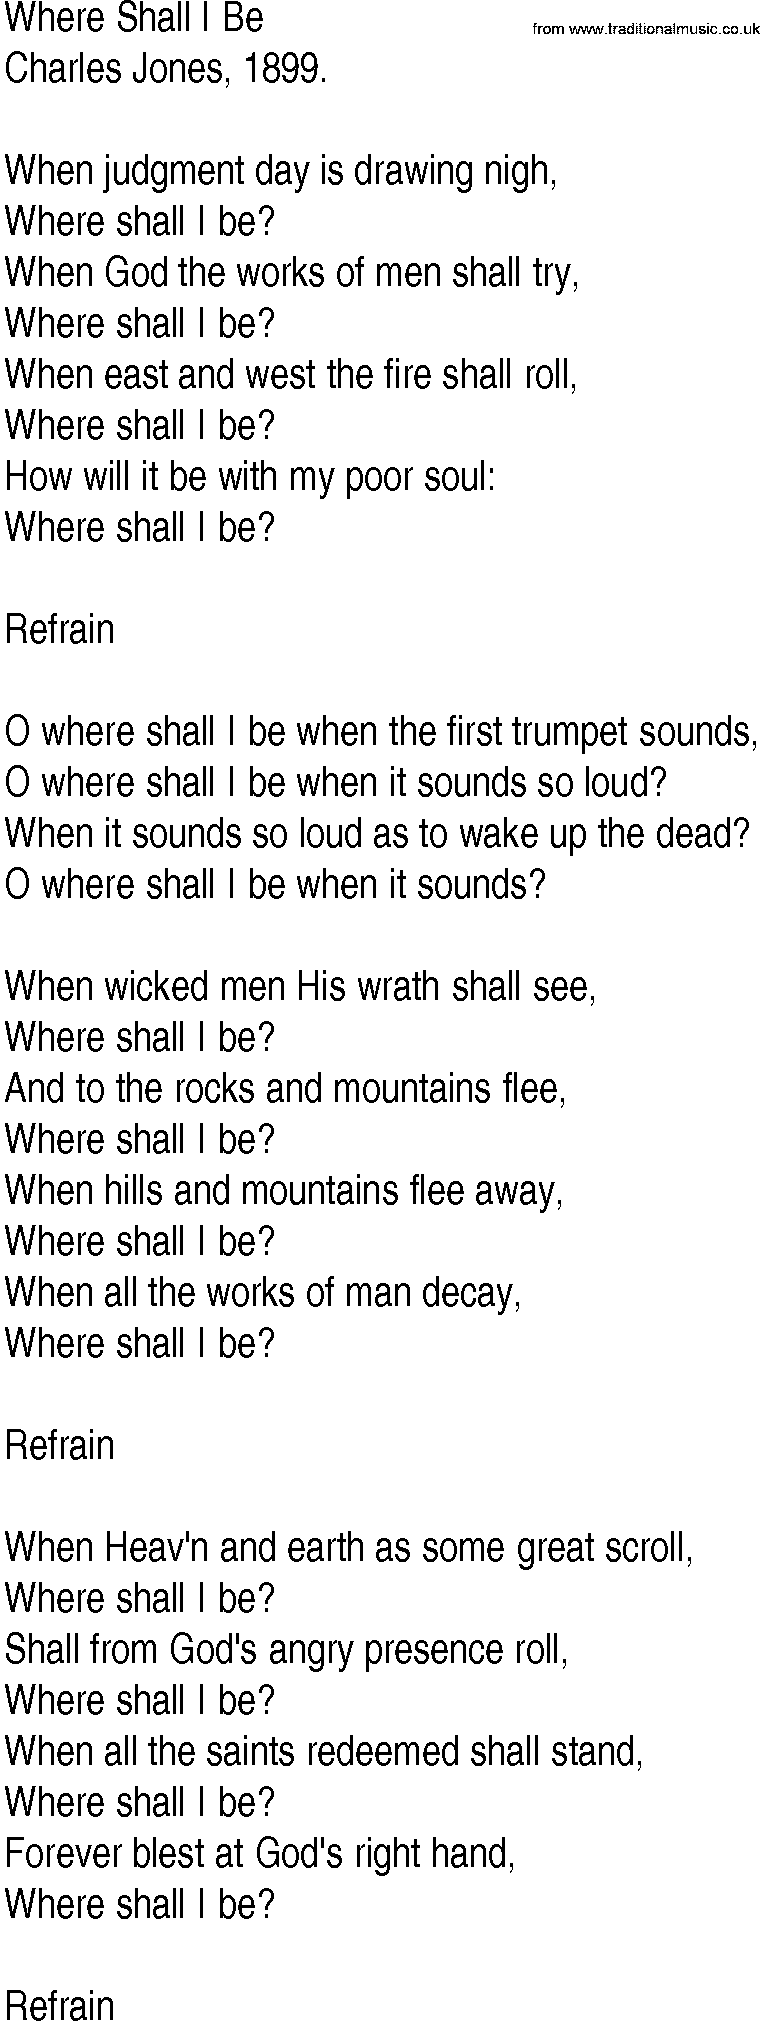 Hymn and Gospel Song: Where Shall I Be by Charles Jones lyrics